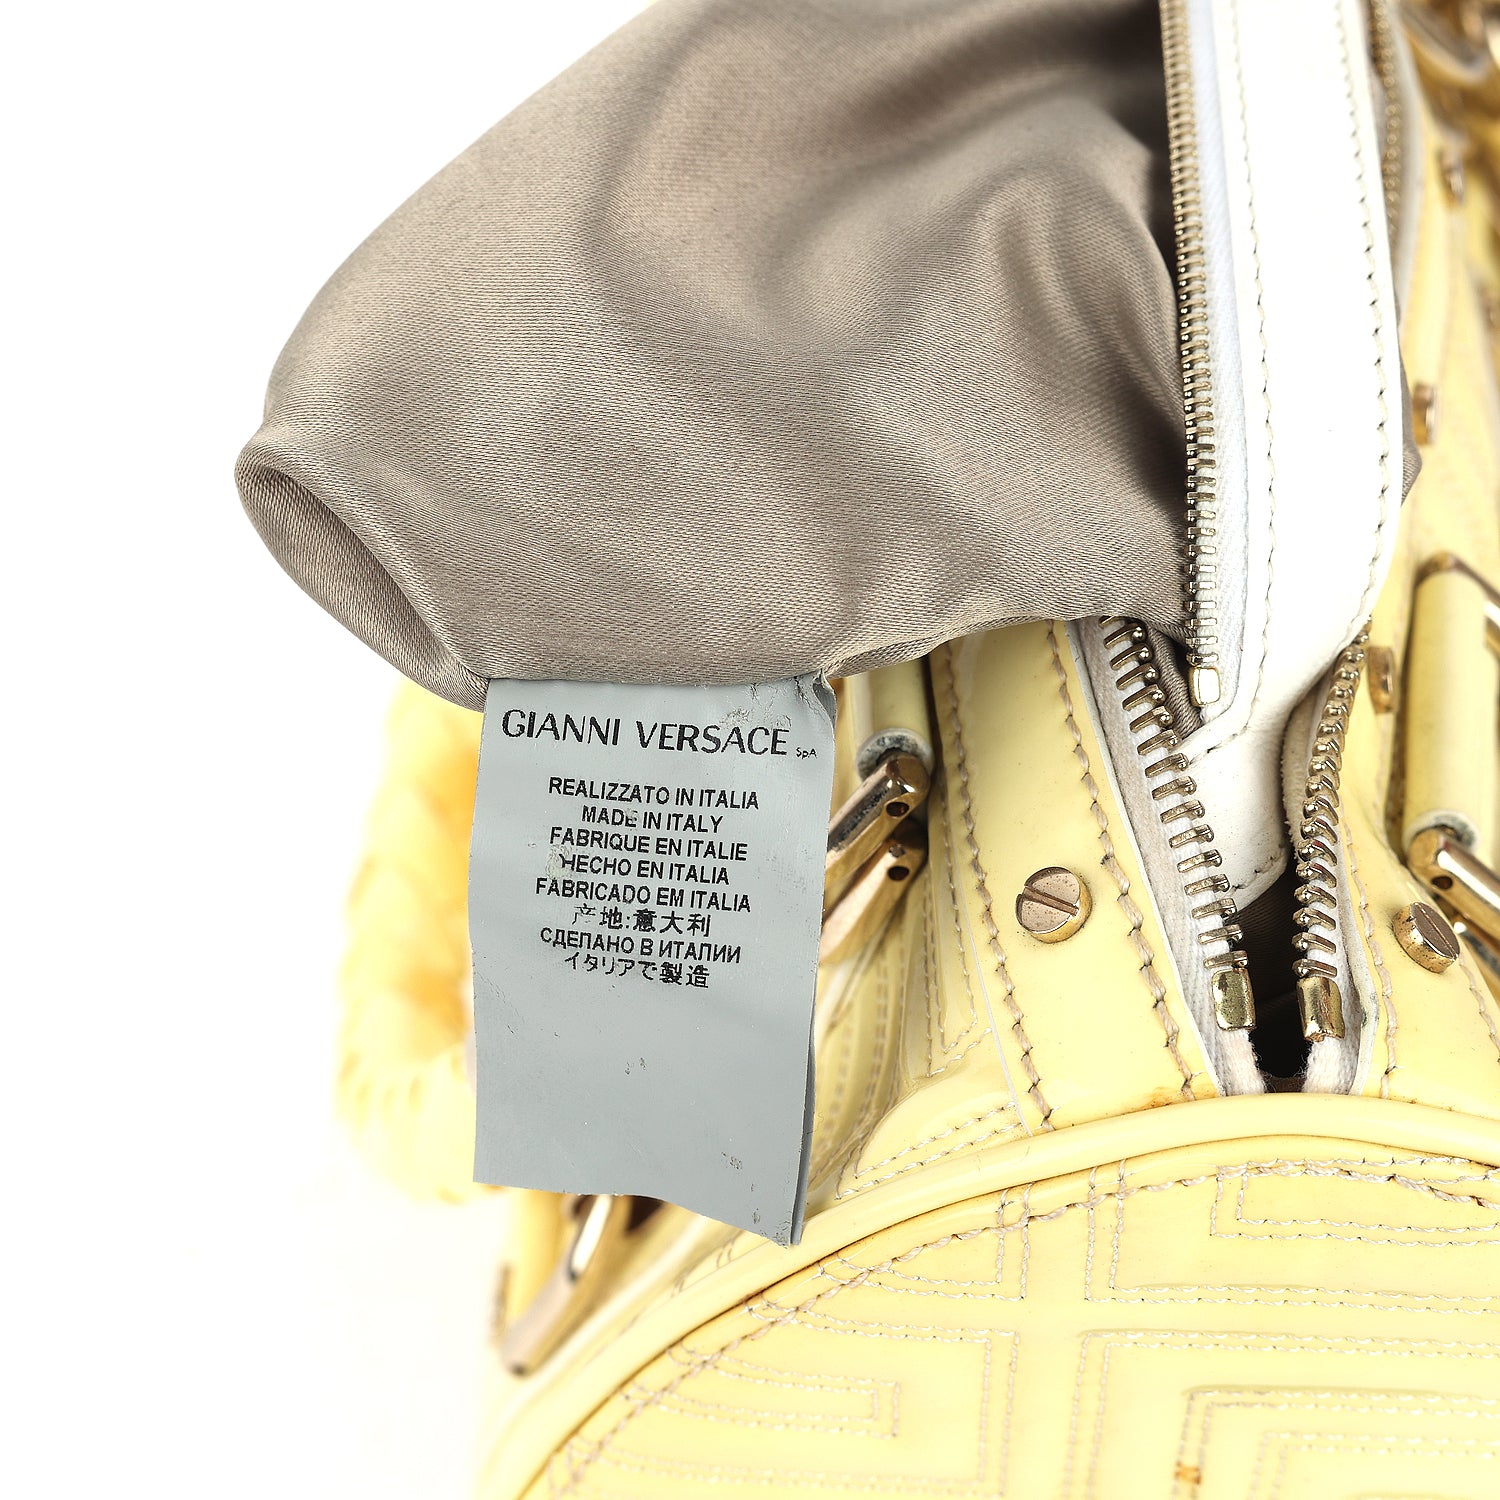 Patent Leather Handbag